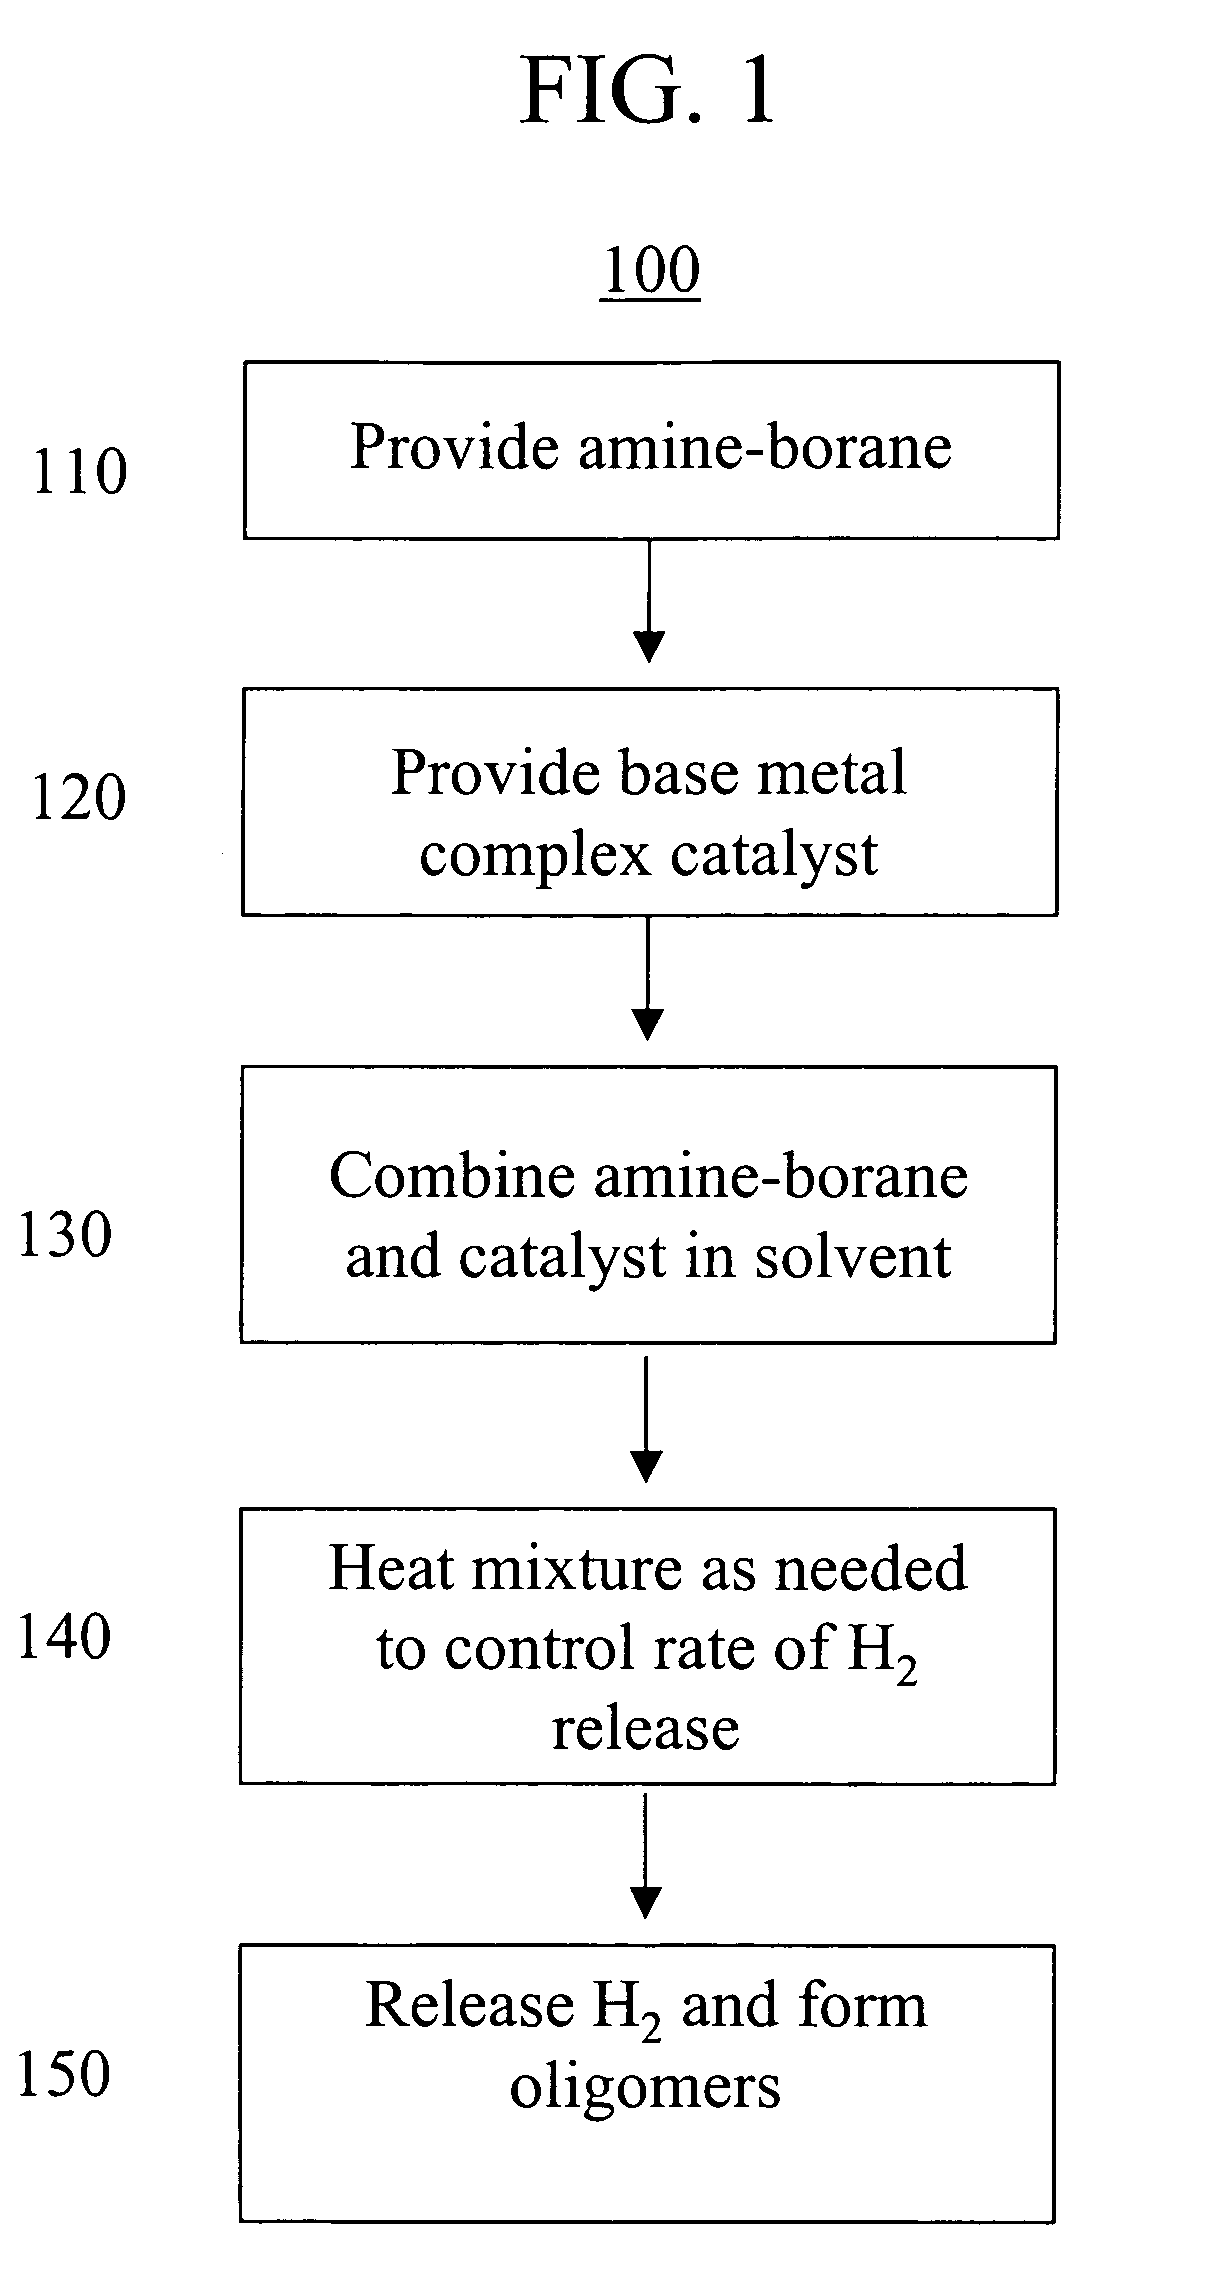 Base metal dehydrogenation of amine-boranes